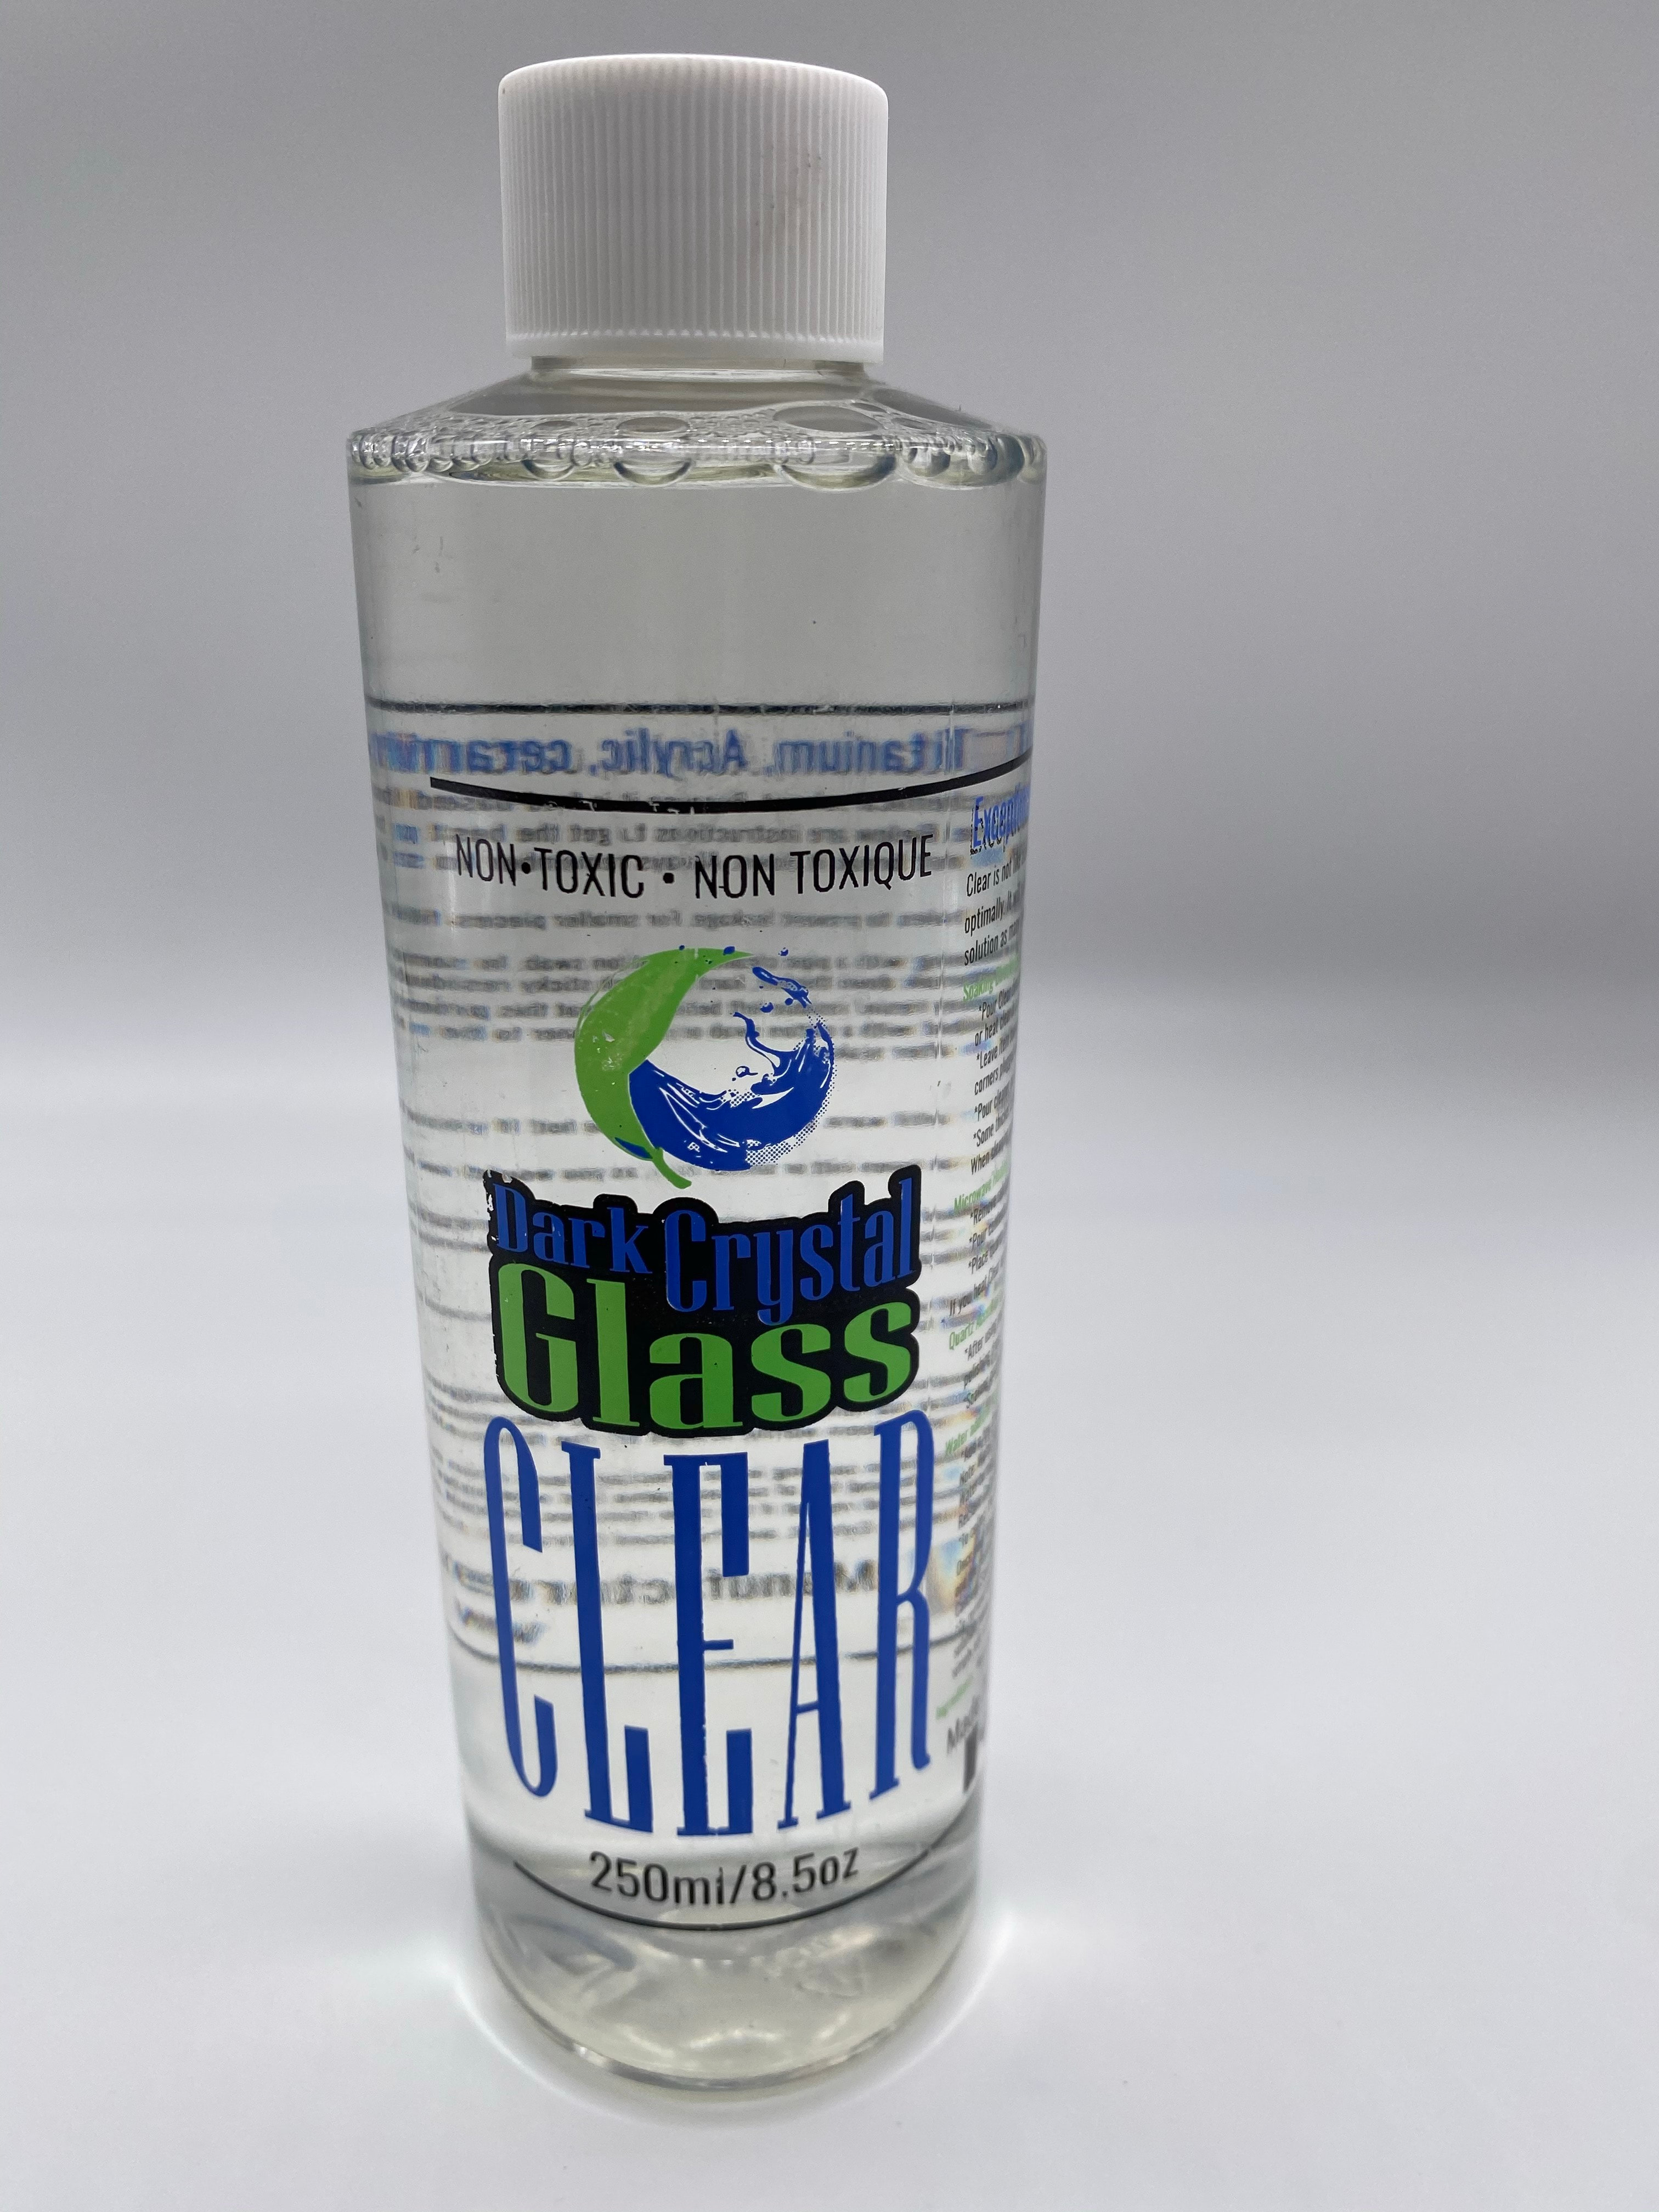 dark crystal glass cleaner